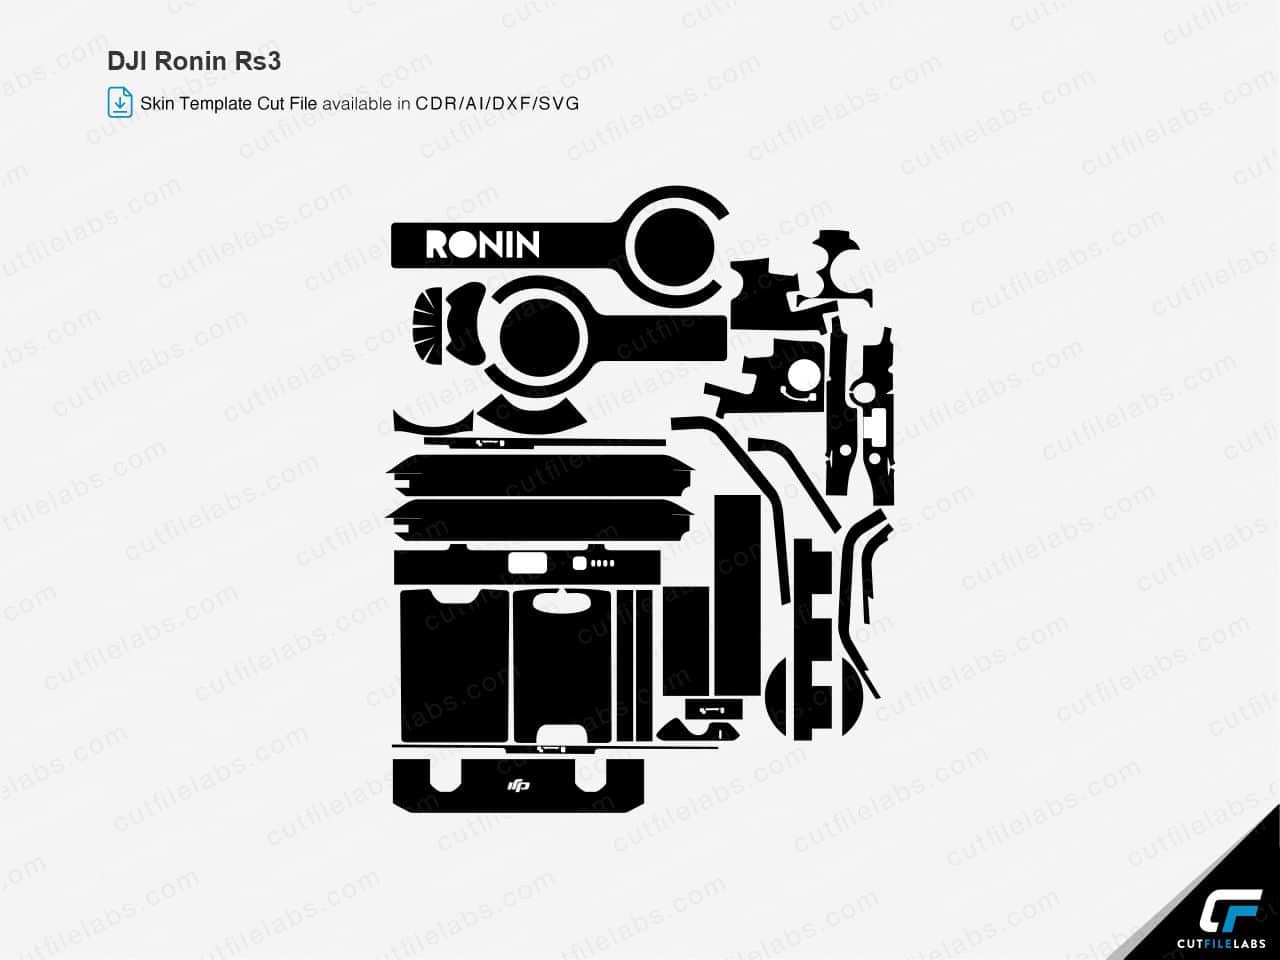 DJI Ronin RS3 Cut File Template